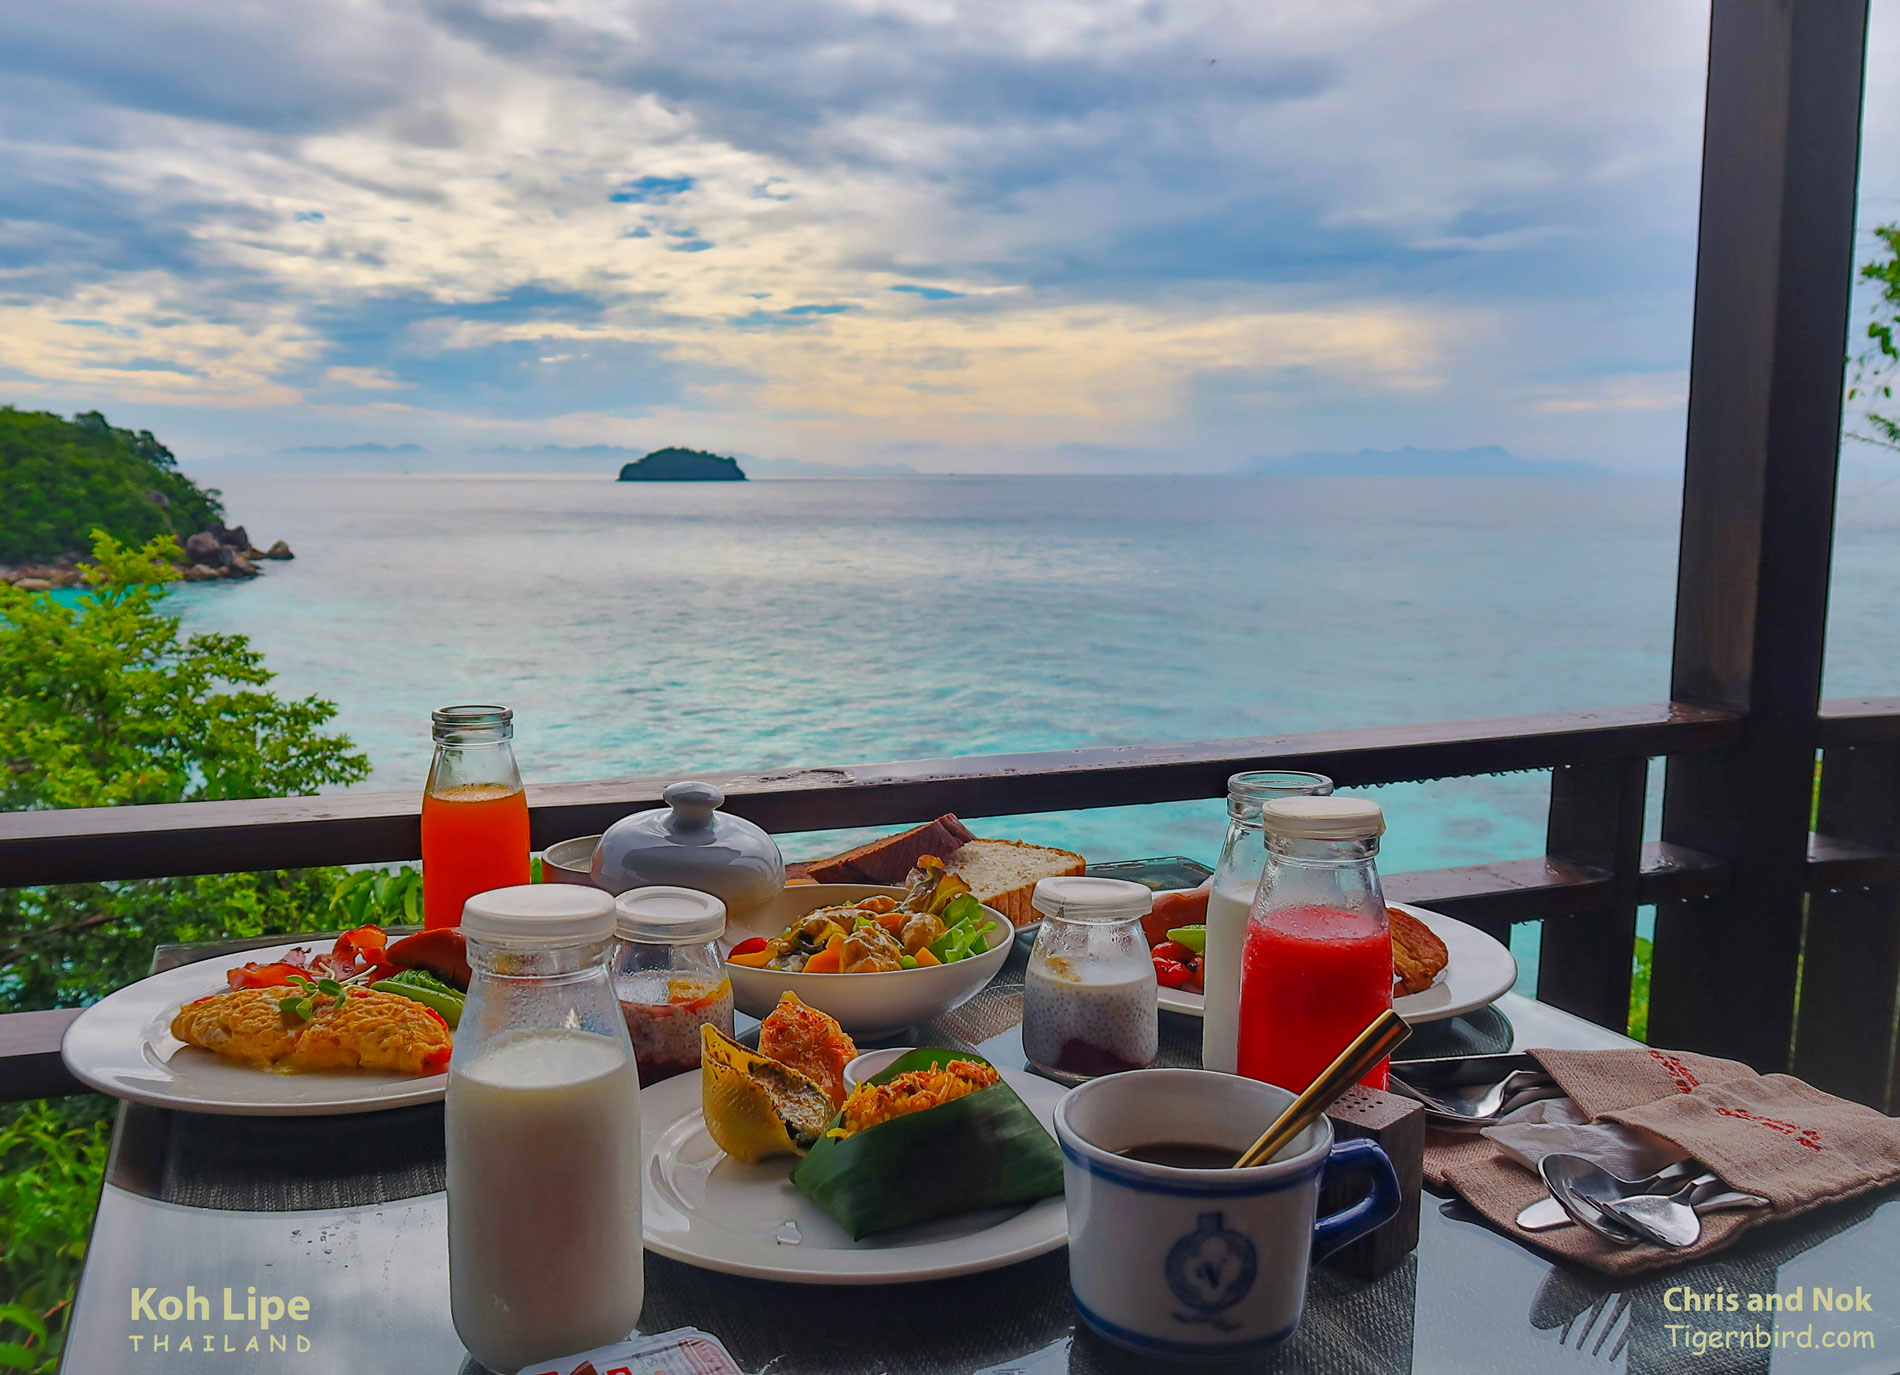 Breakfast spread at villa above azure waters of Andaman Sea at Koh Lipe